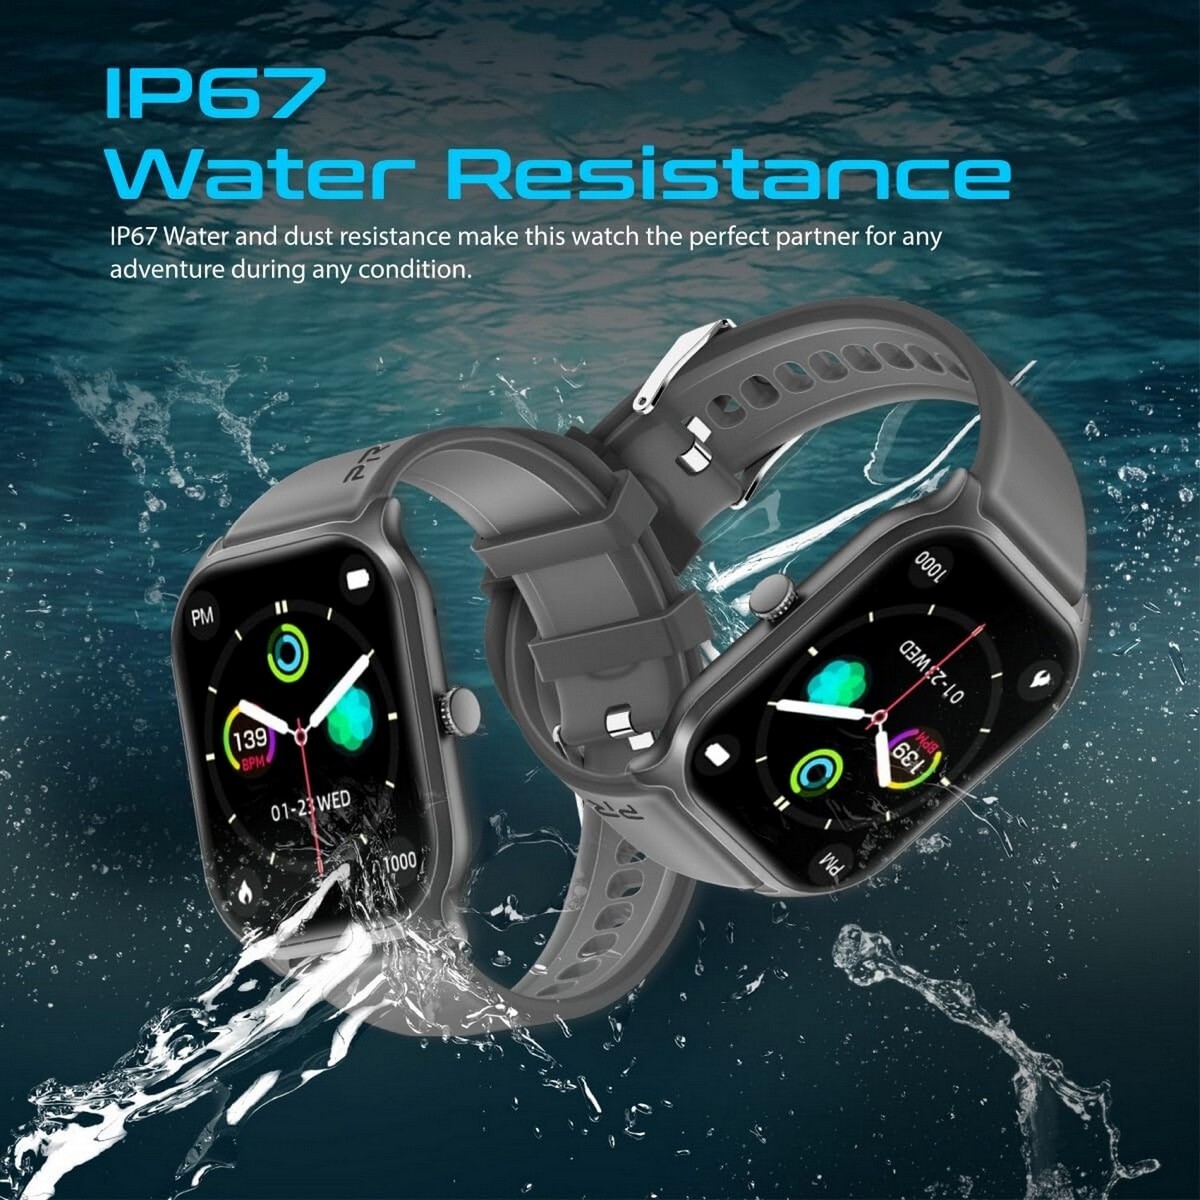 Promate Xwatch-B2 Smart Watch Graphite